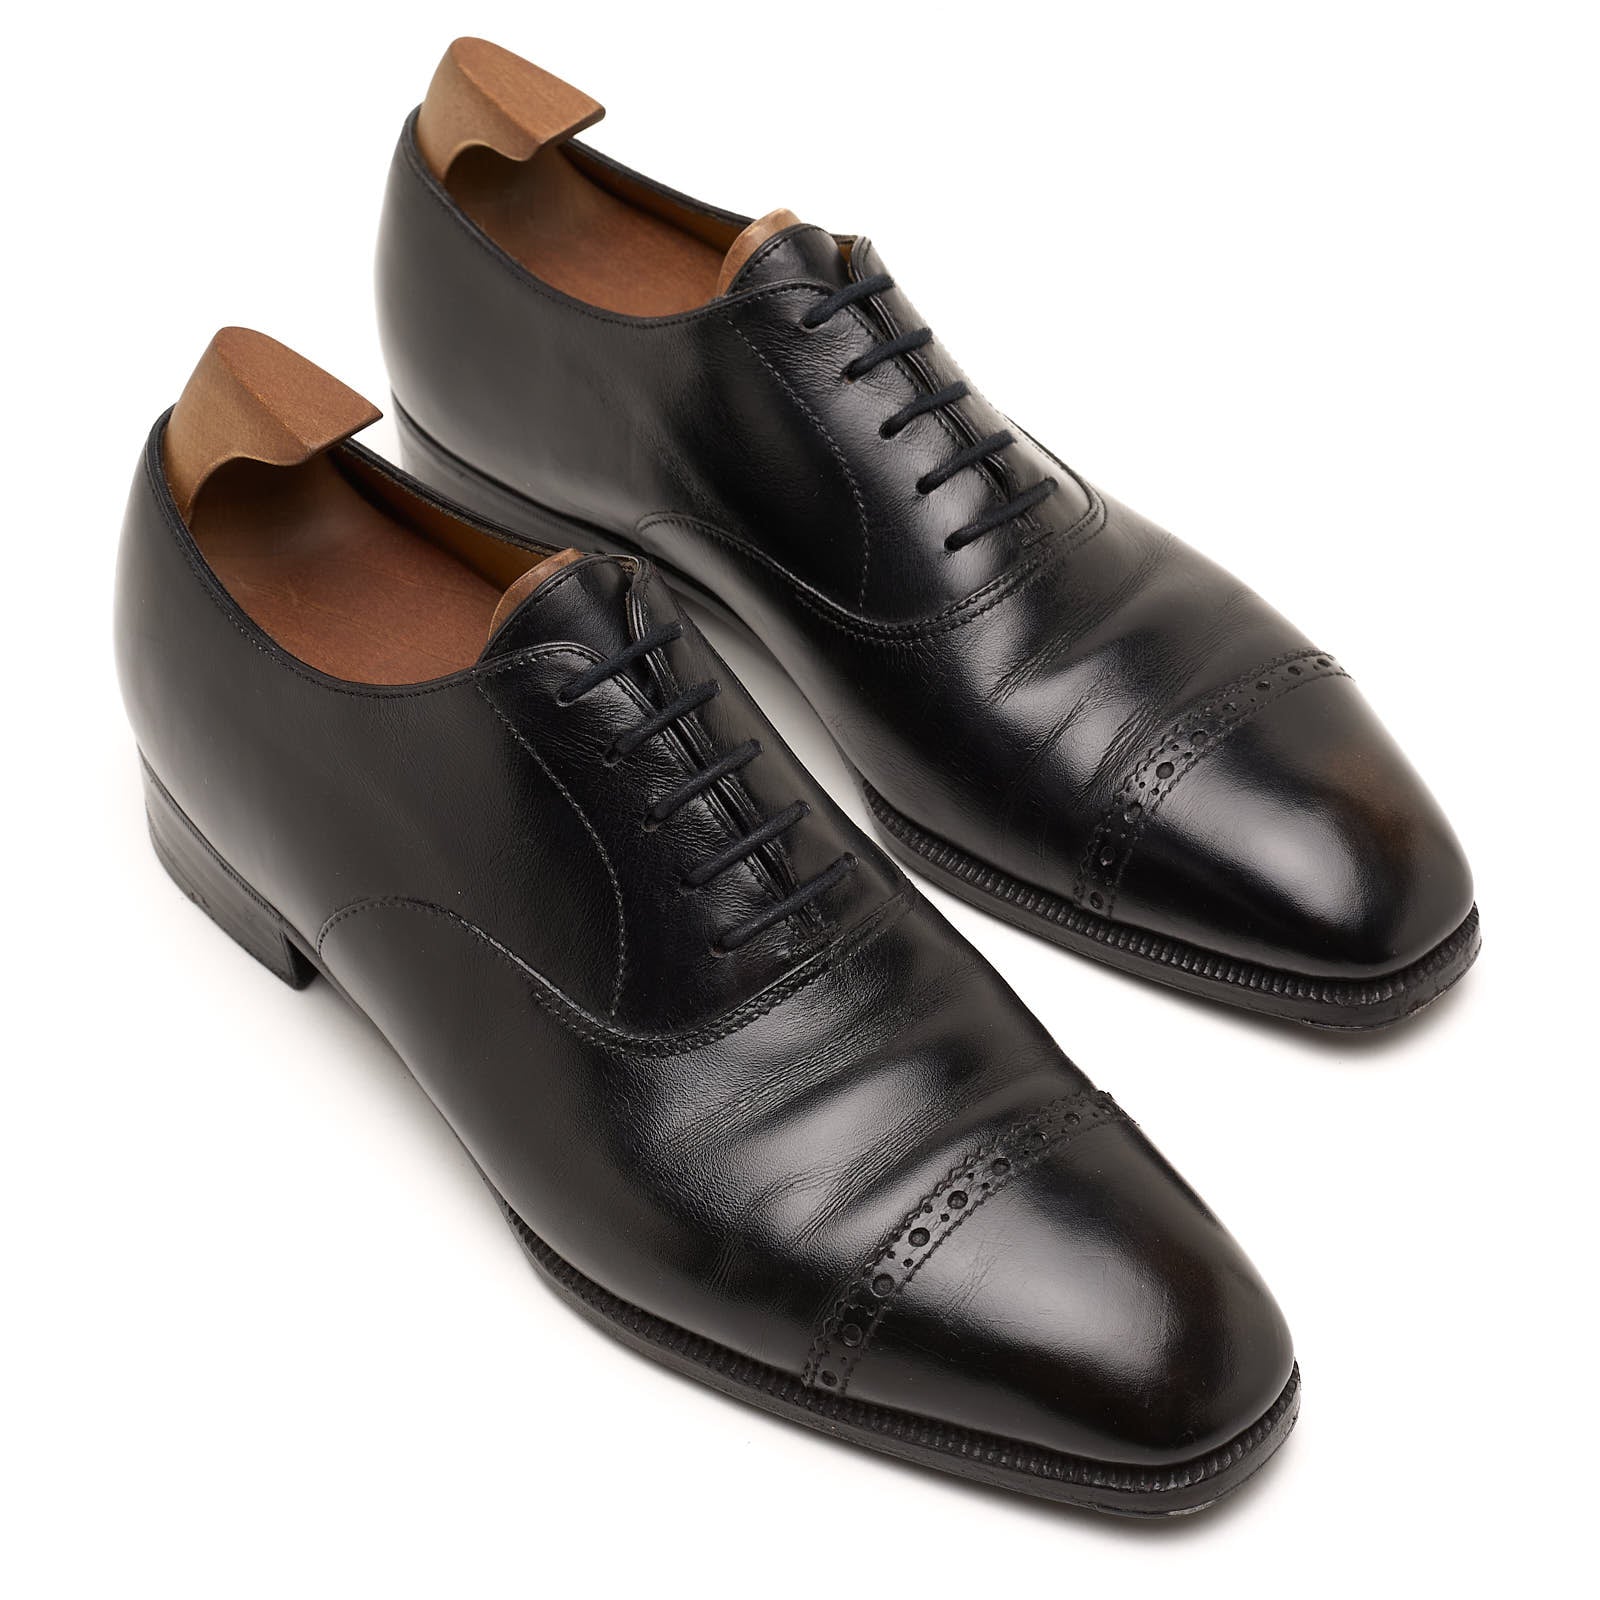 DIMITRI BOTTIER for CROCKETT & JONES  Black Oxford Shoes  US 8.5